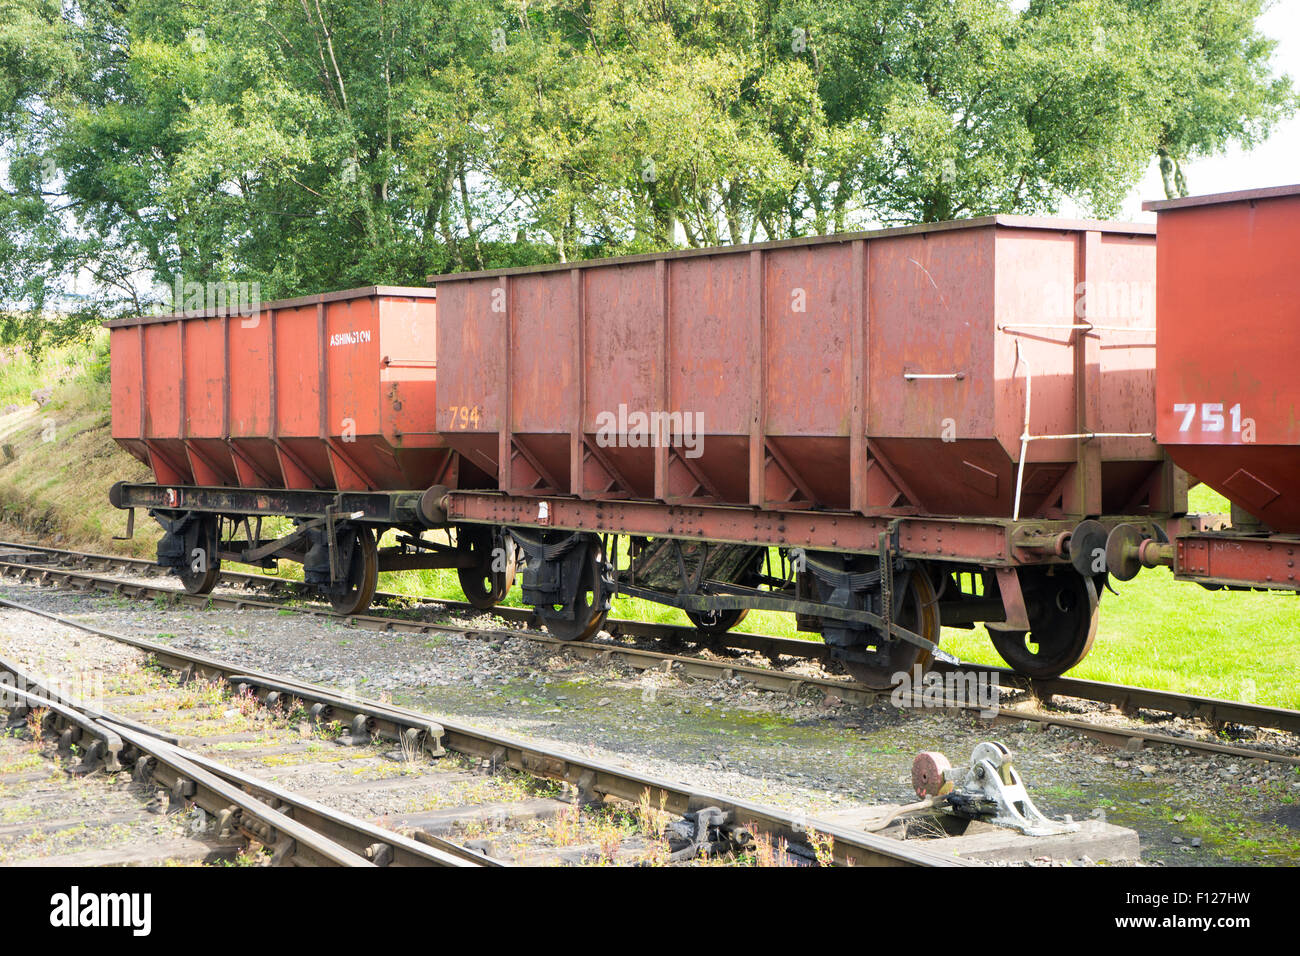 Empty coal train carriage on a railway track. Stock Photo